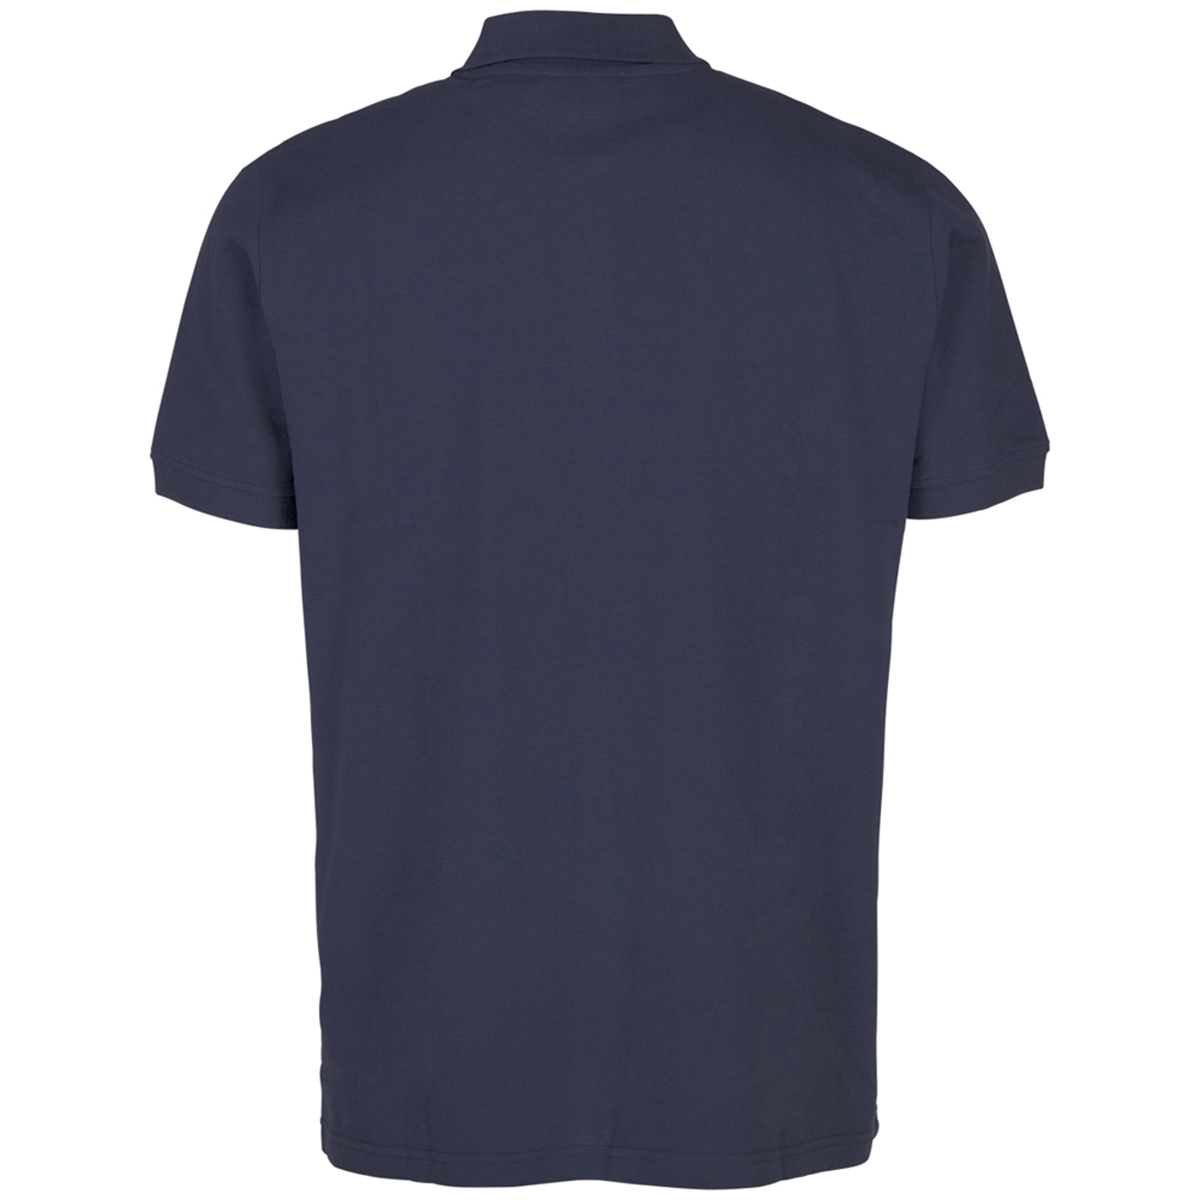 Kappa Unisex Polo Shirt Damen Herren 303173 navy